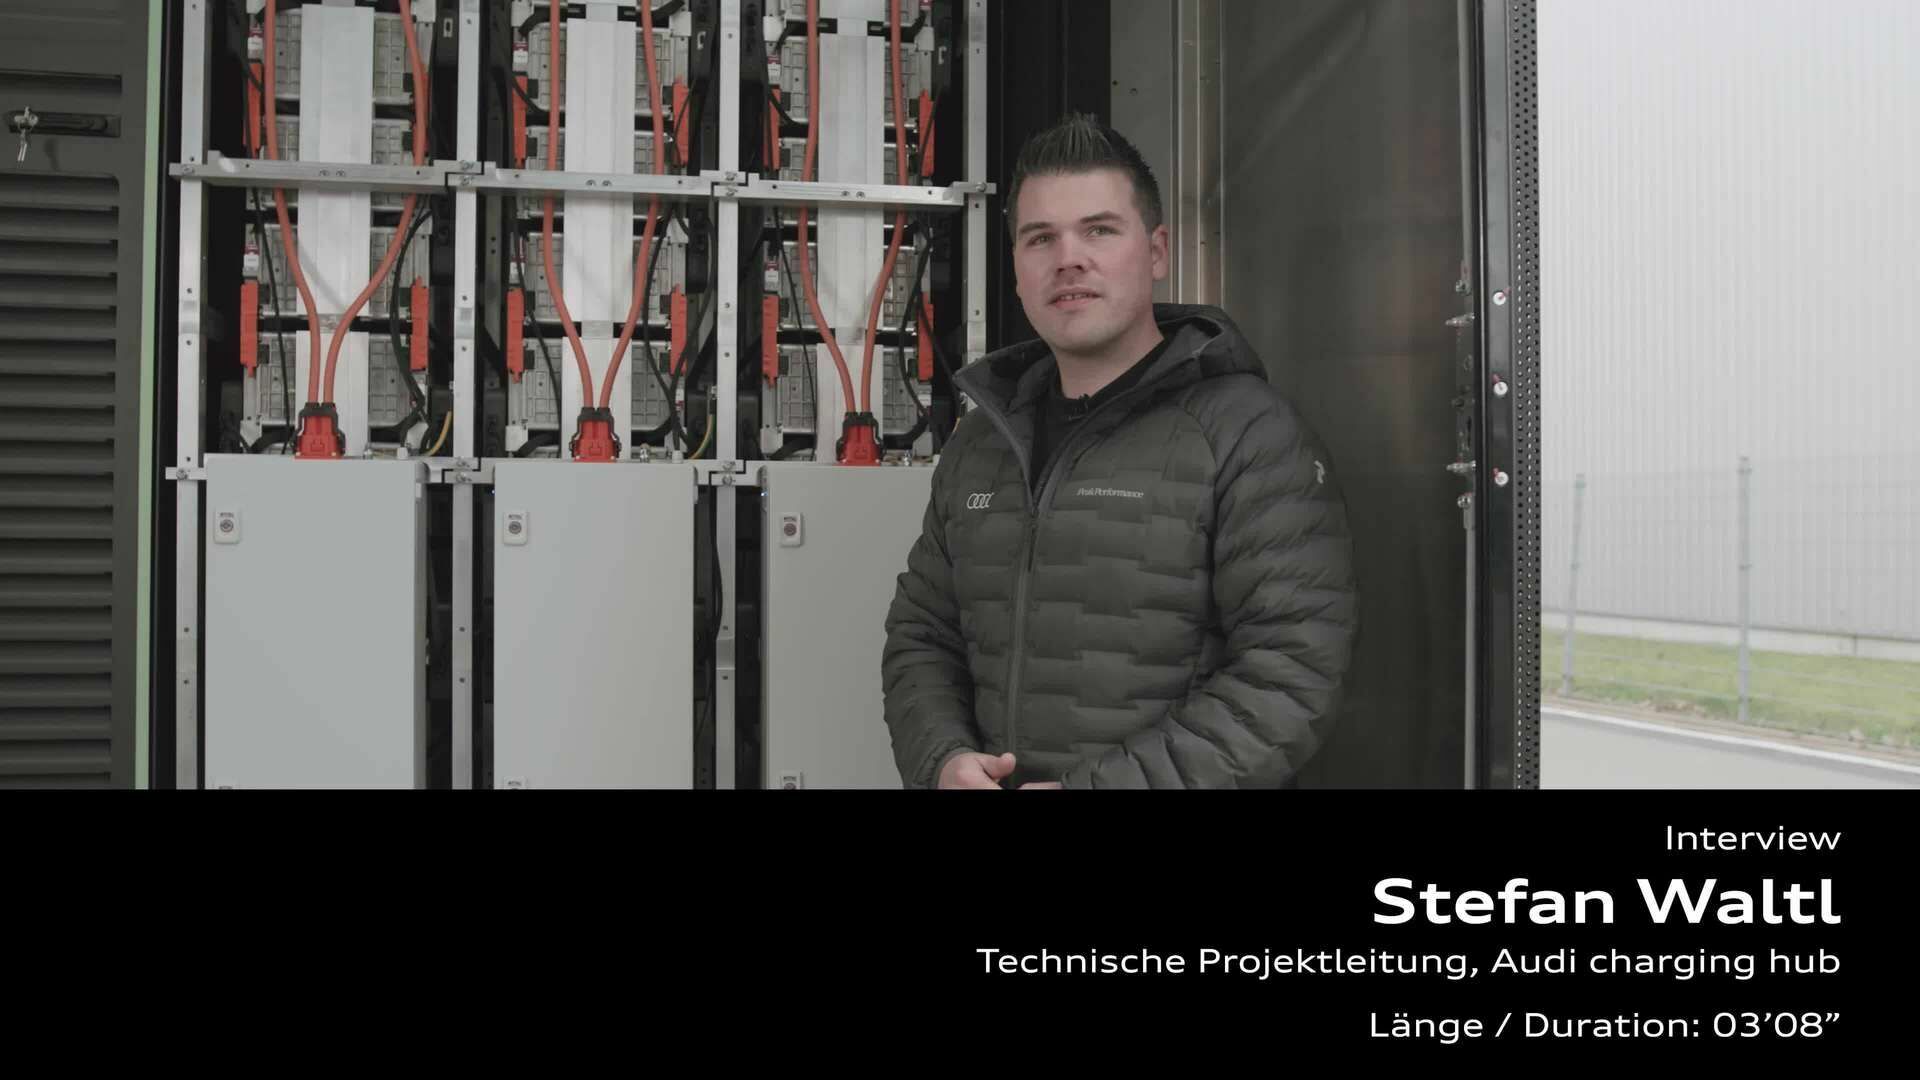 Footage: Statement from Stefan Waltl on the Audi charging hub Berlin